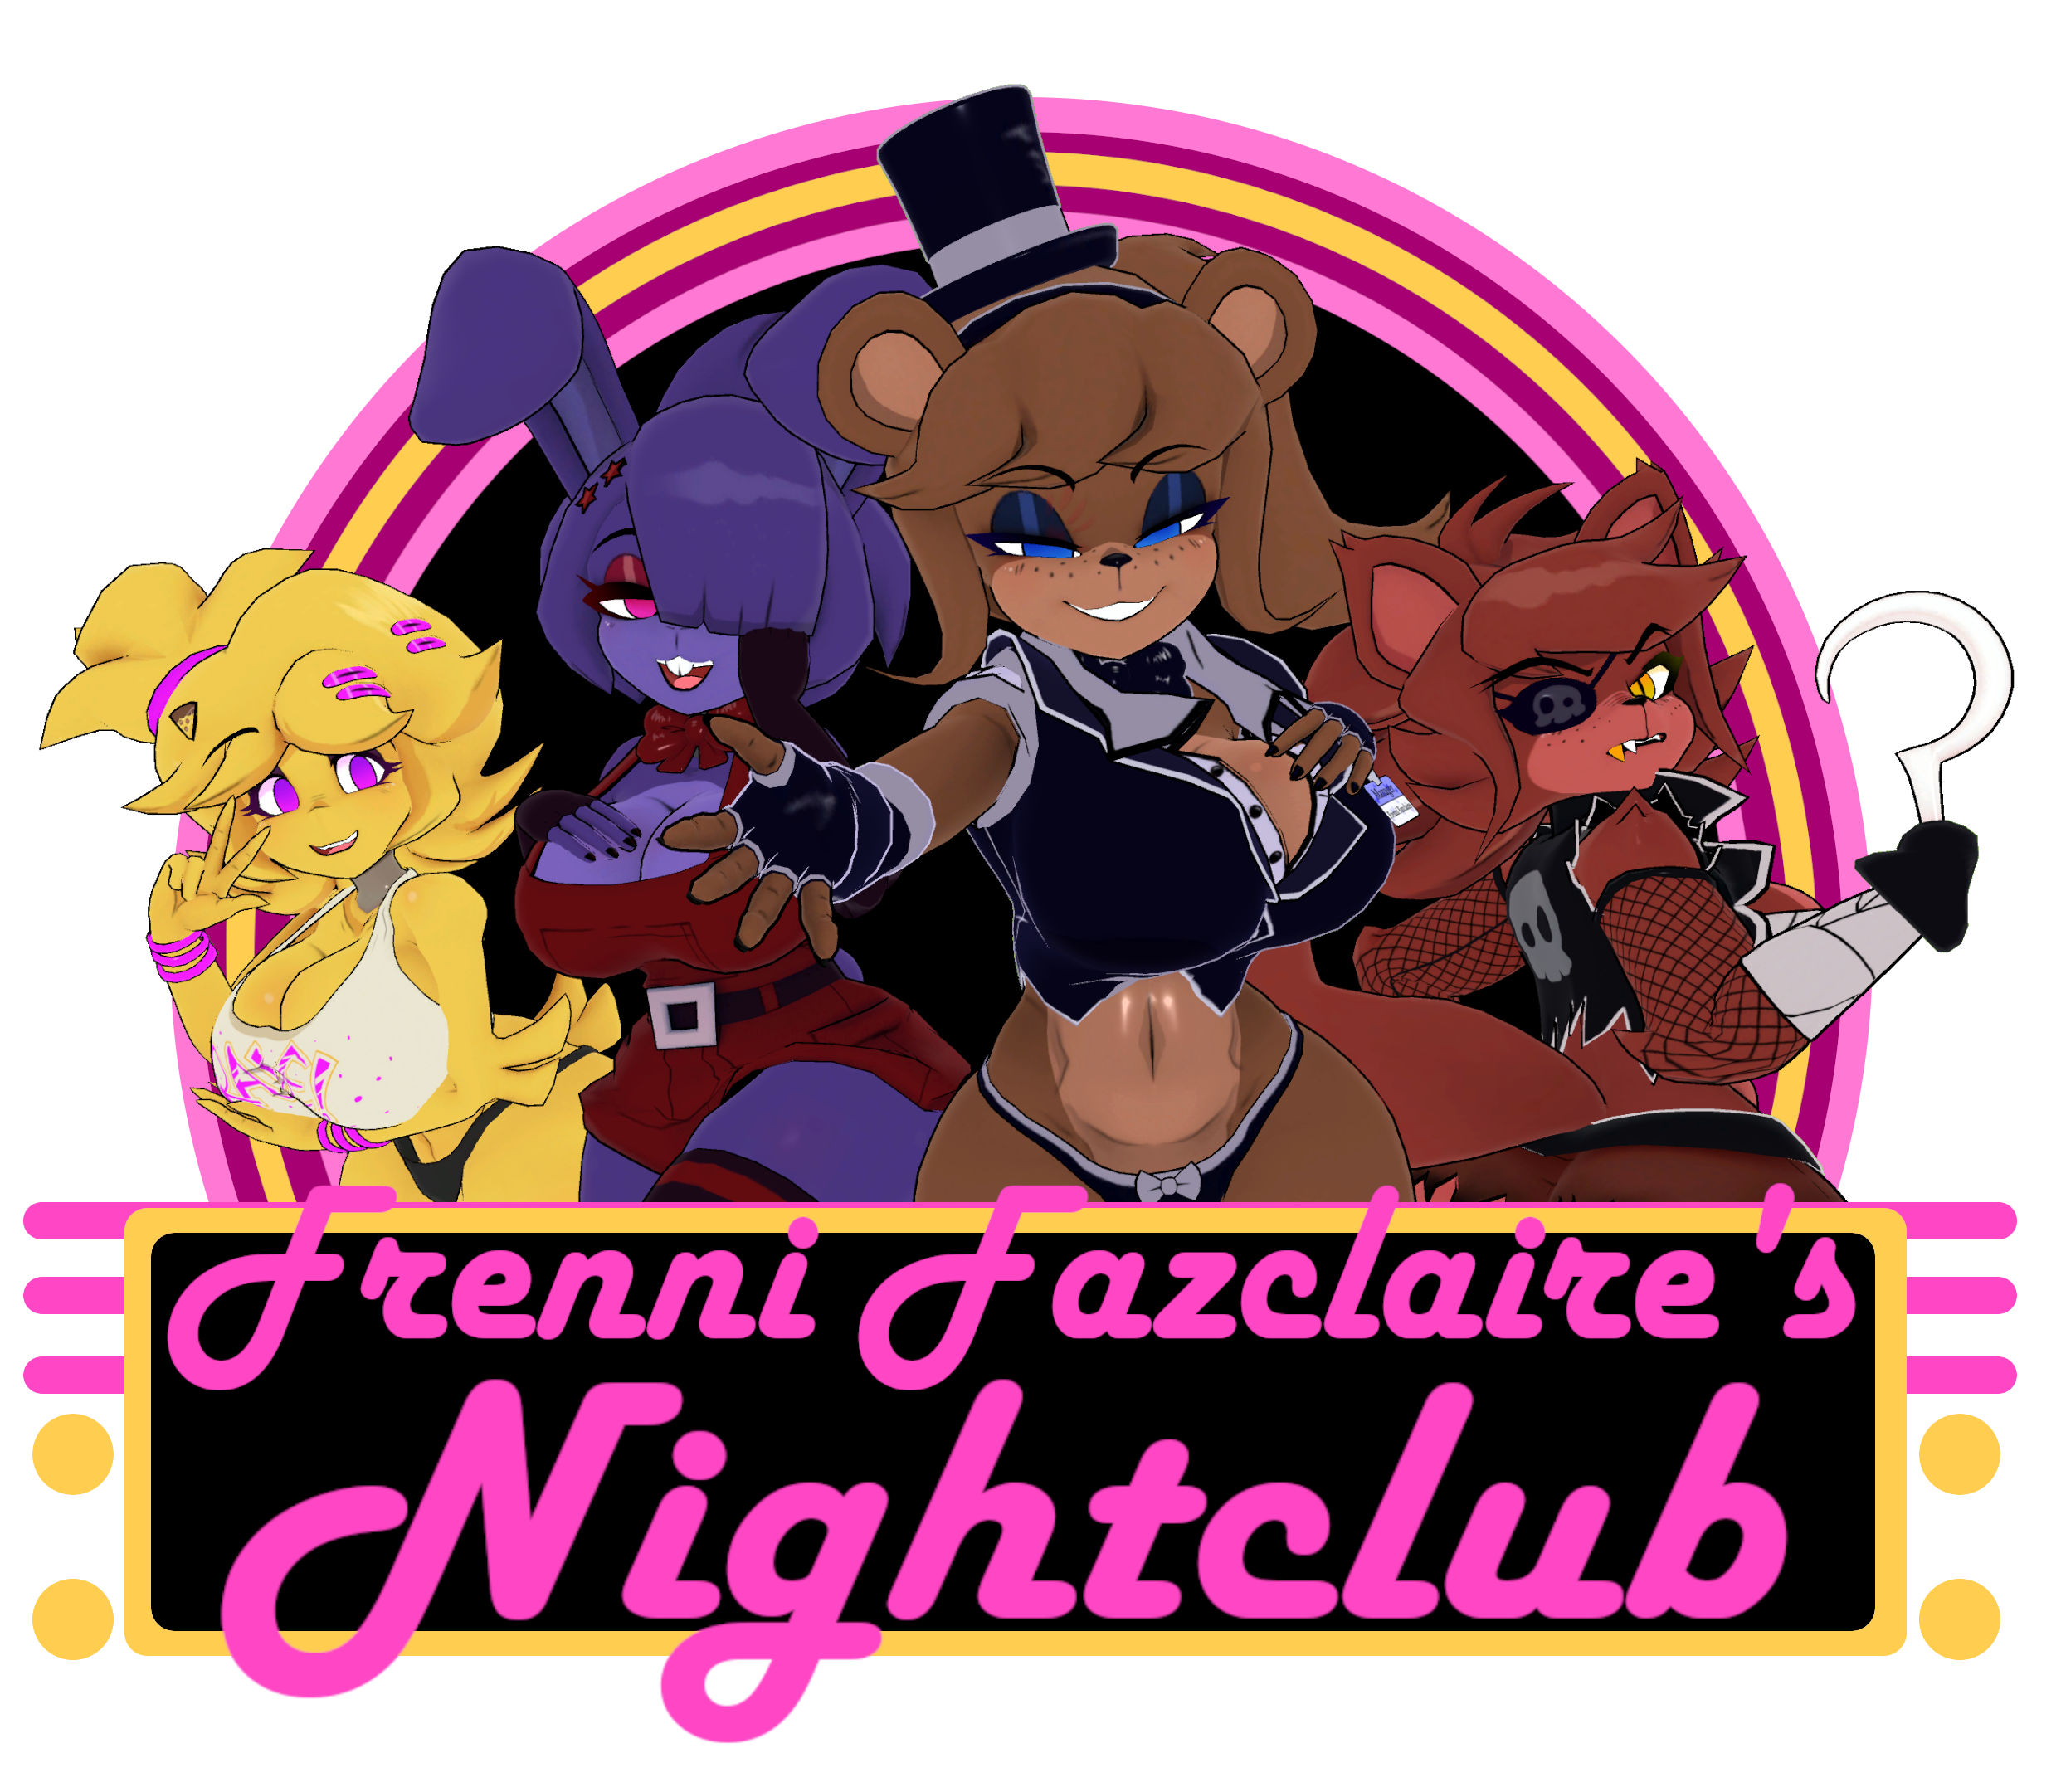 Night shift at fazclaires nightclub